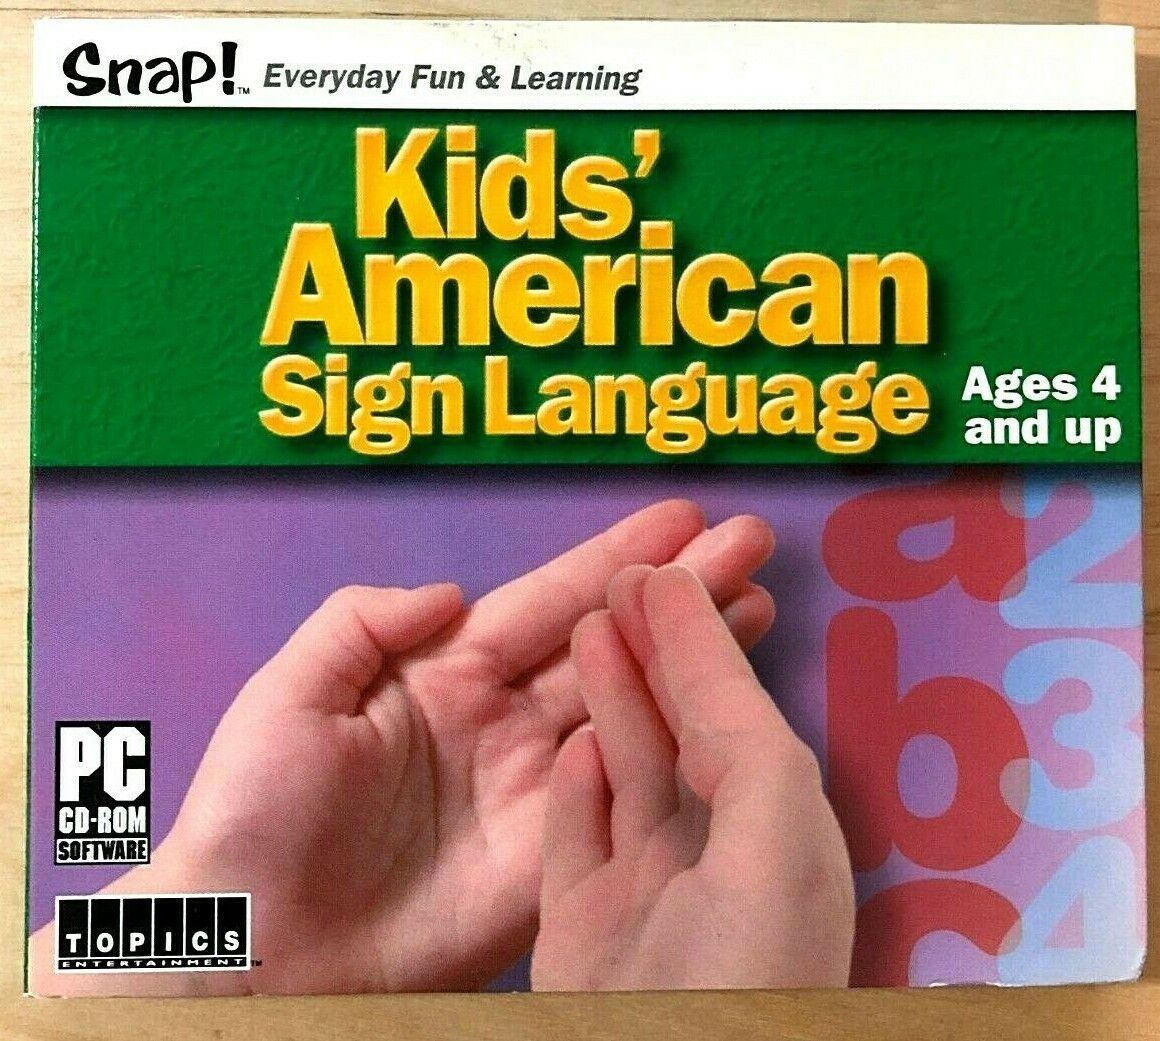 Kids American Sign Language Vintage PC CD Rom Software Unopened